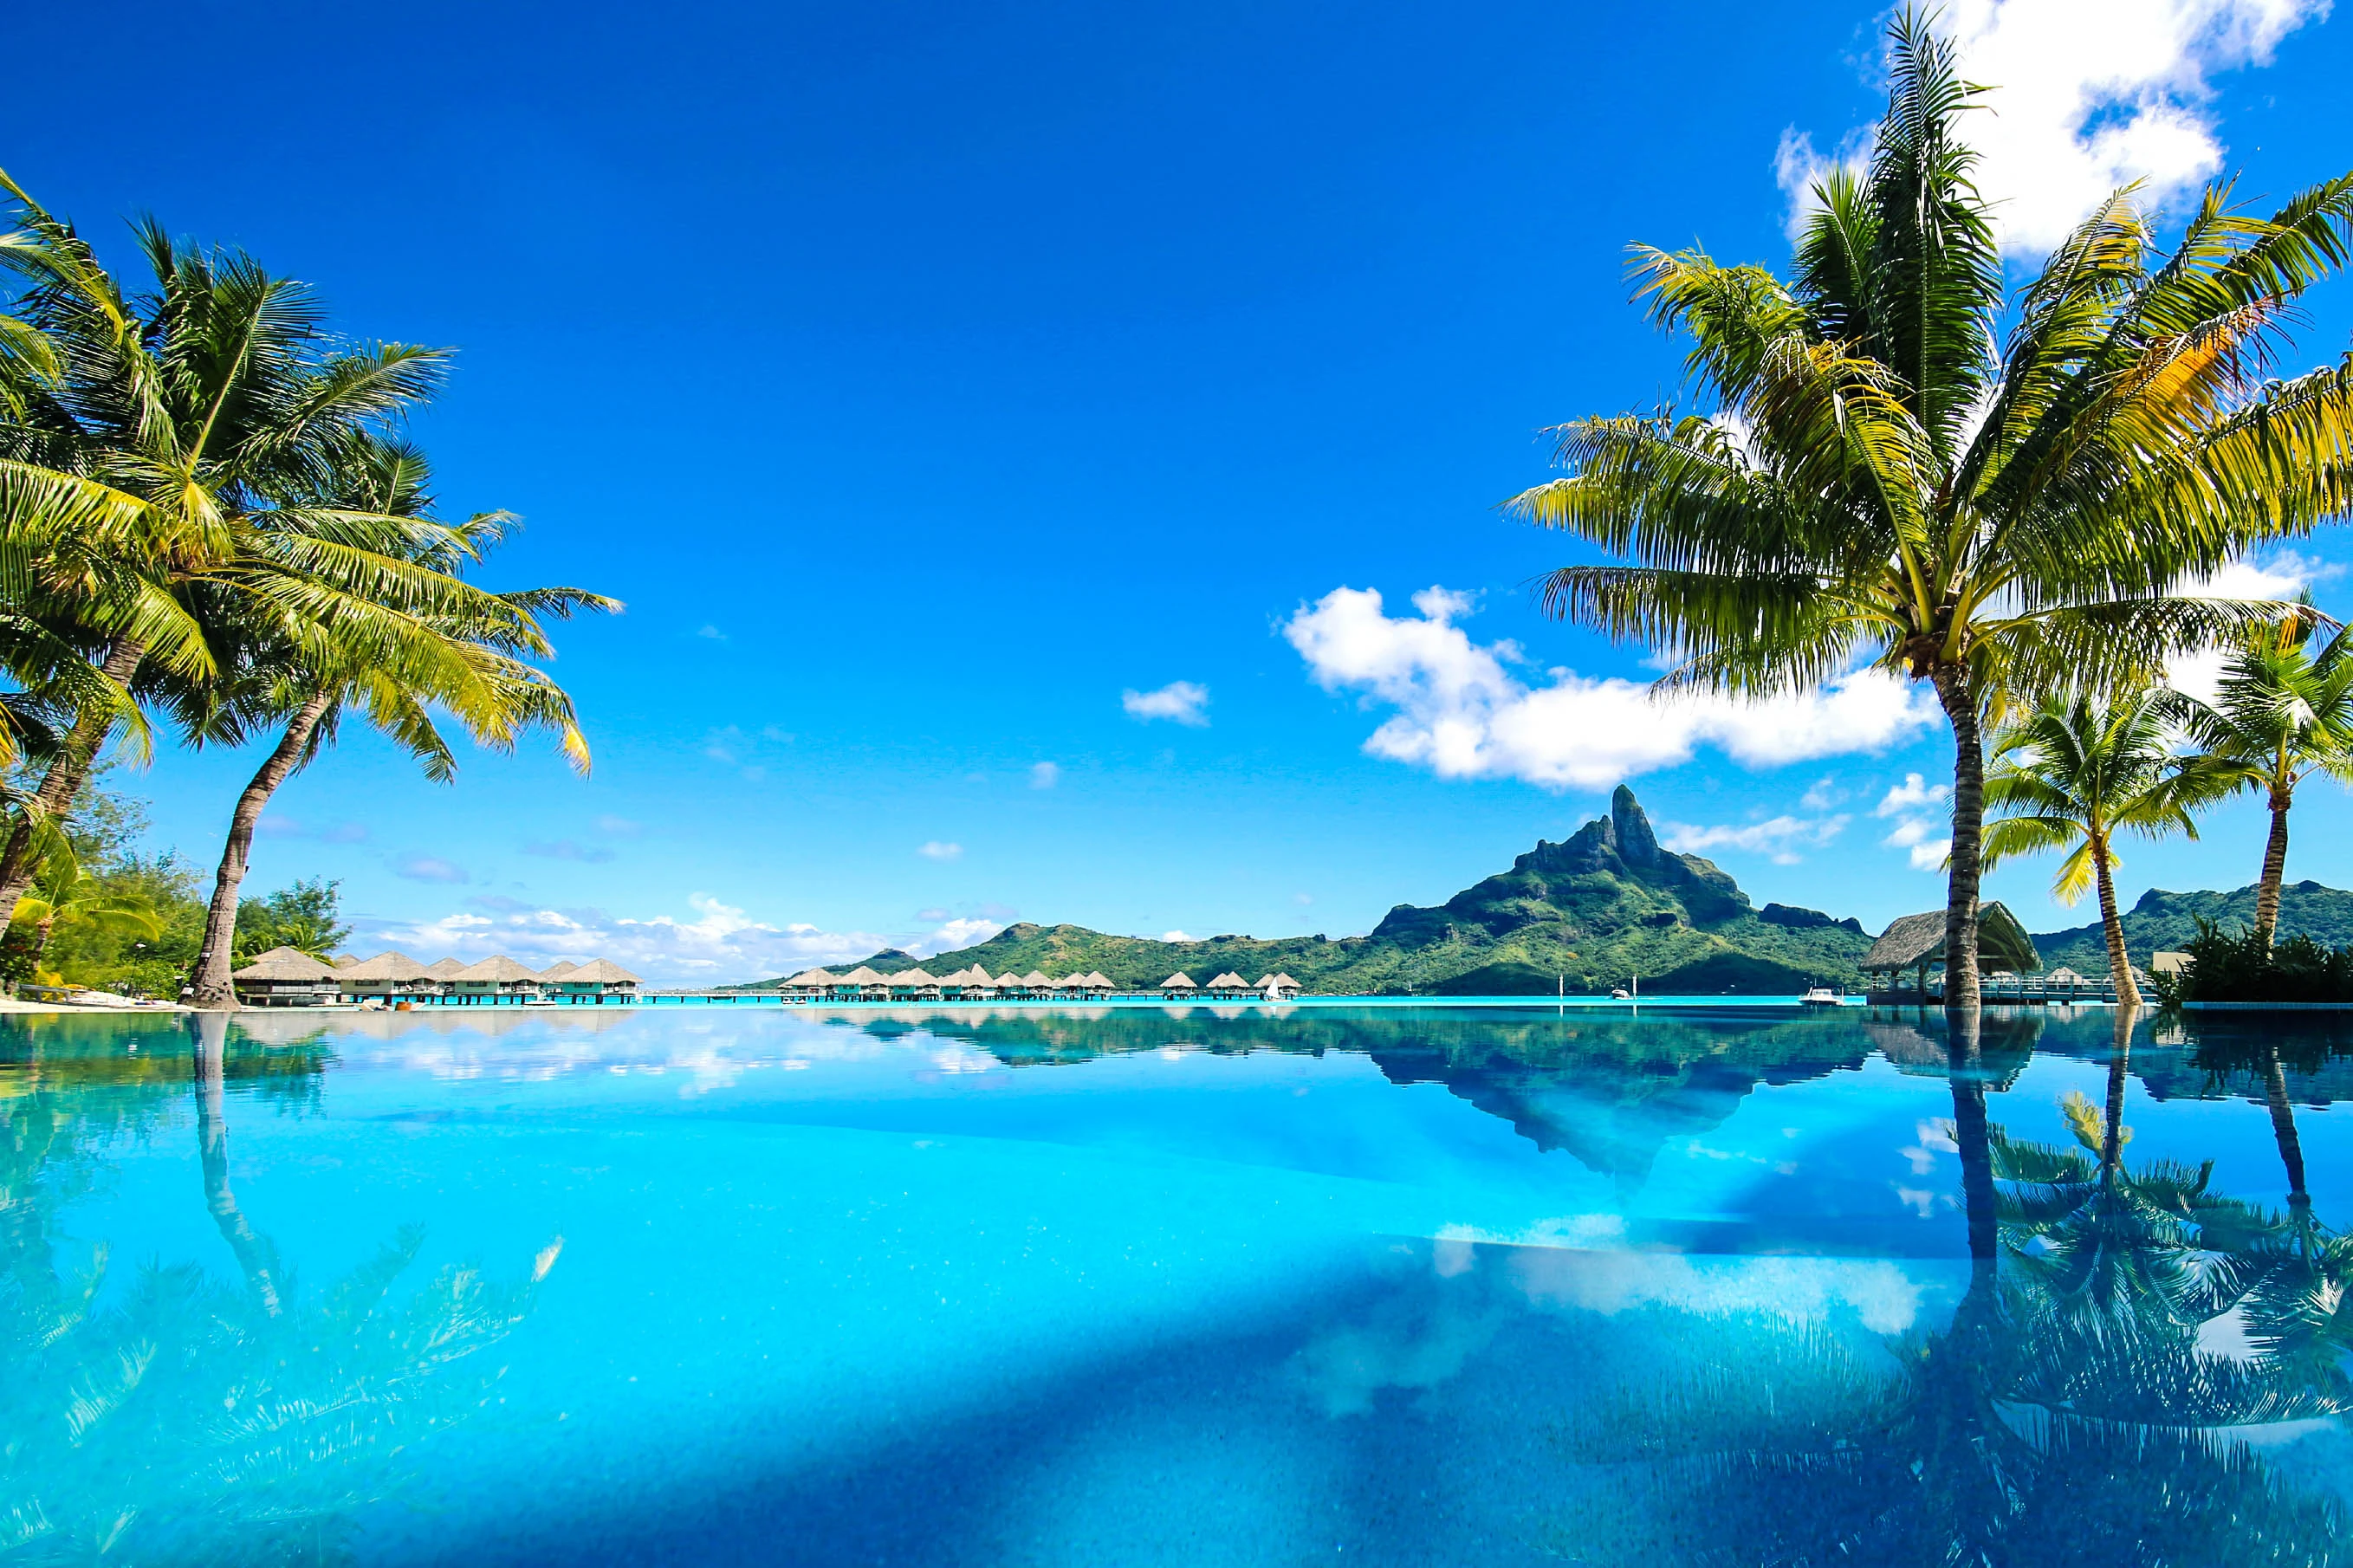 Descubre la belleza de Bora Bora